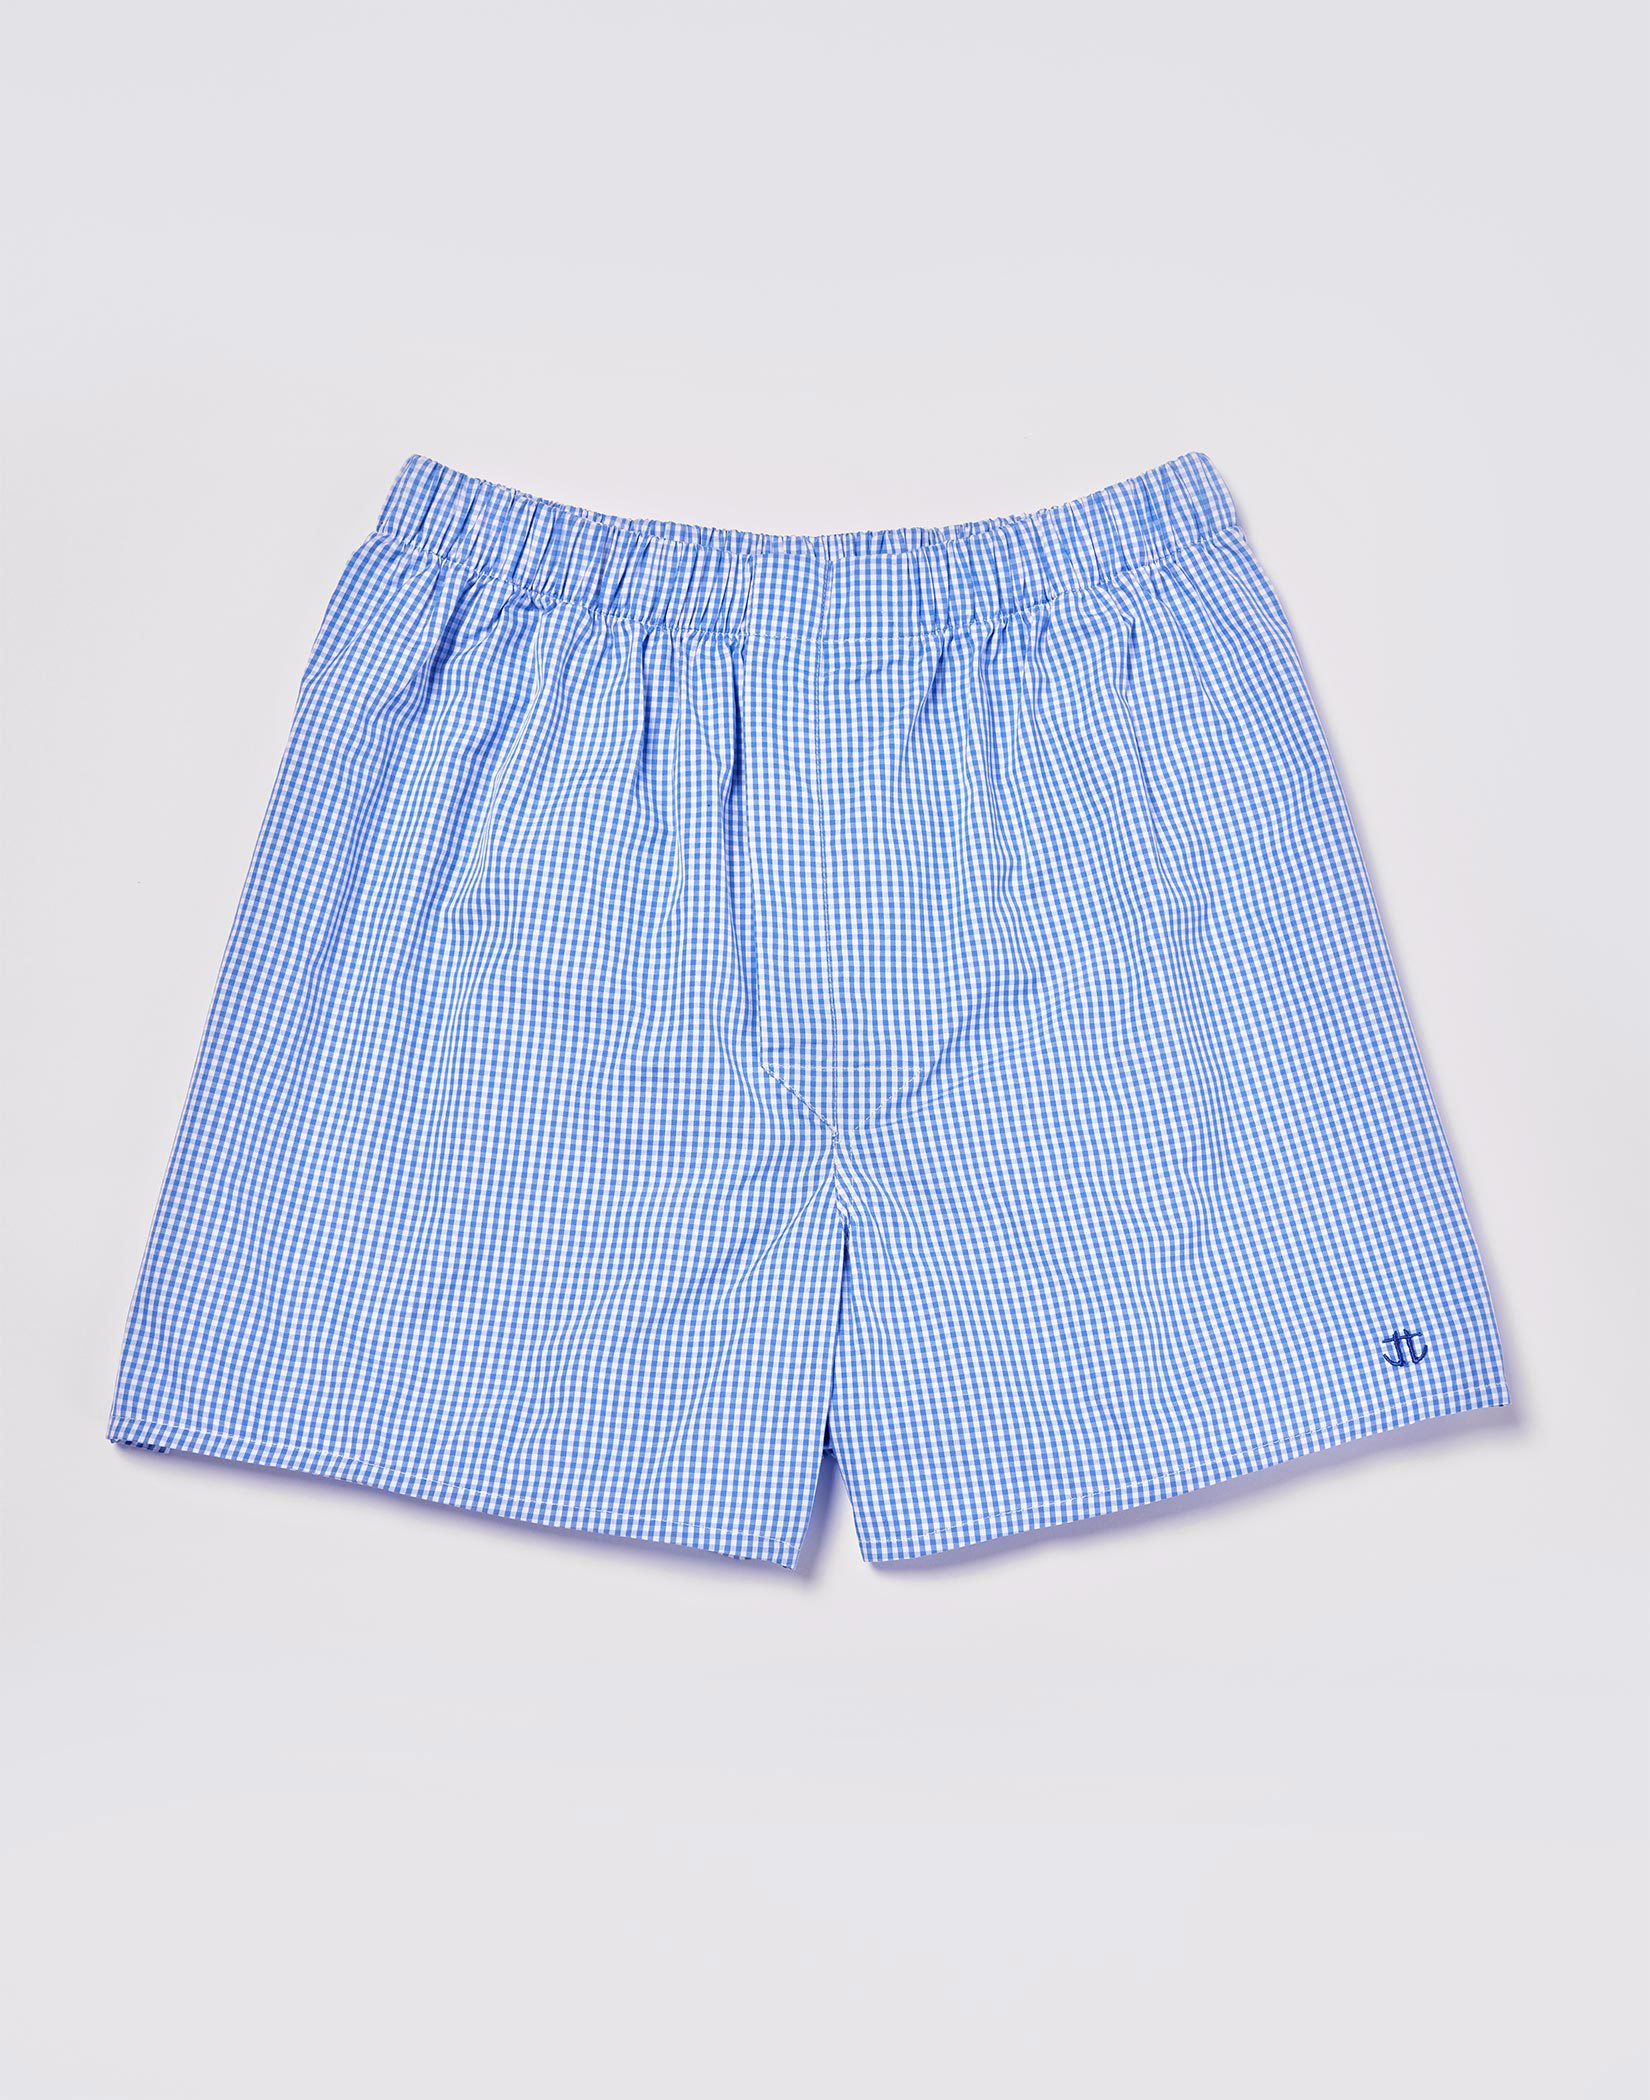 Boxer Shorts - Blue Gingham Check